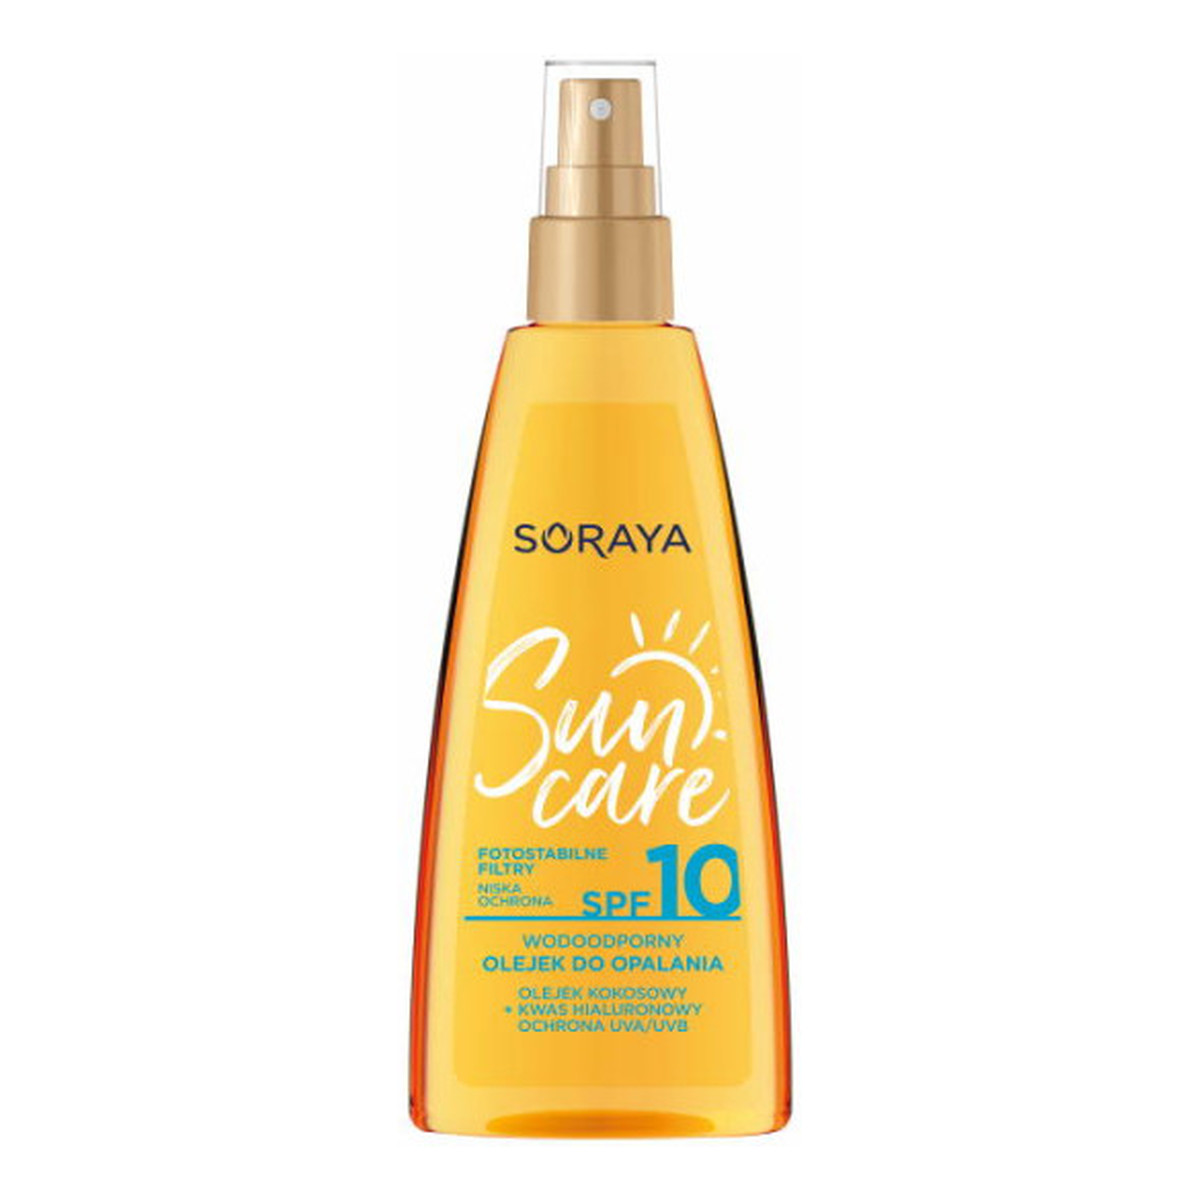 Soraya Sun Care SPF 10 Wodoodporny olejek do opalania 150ml